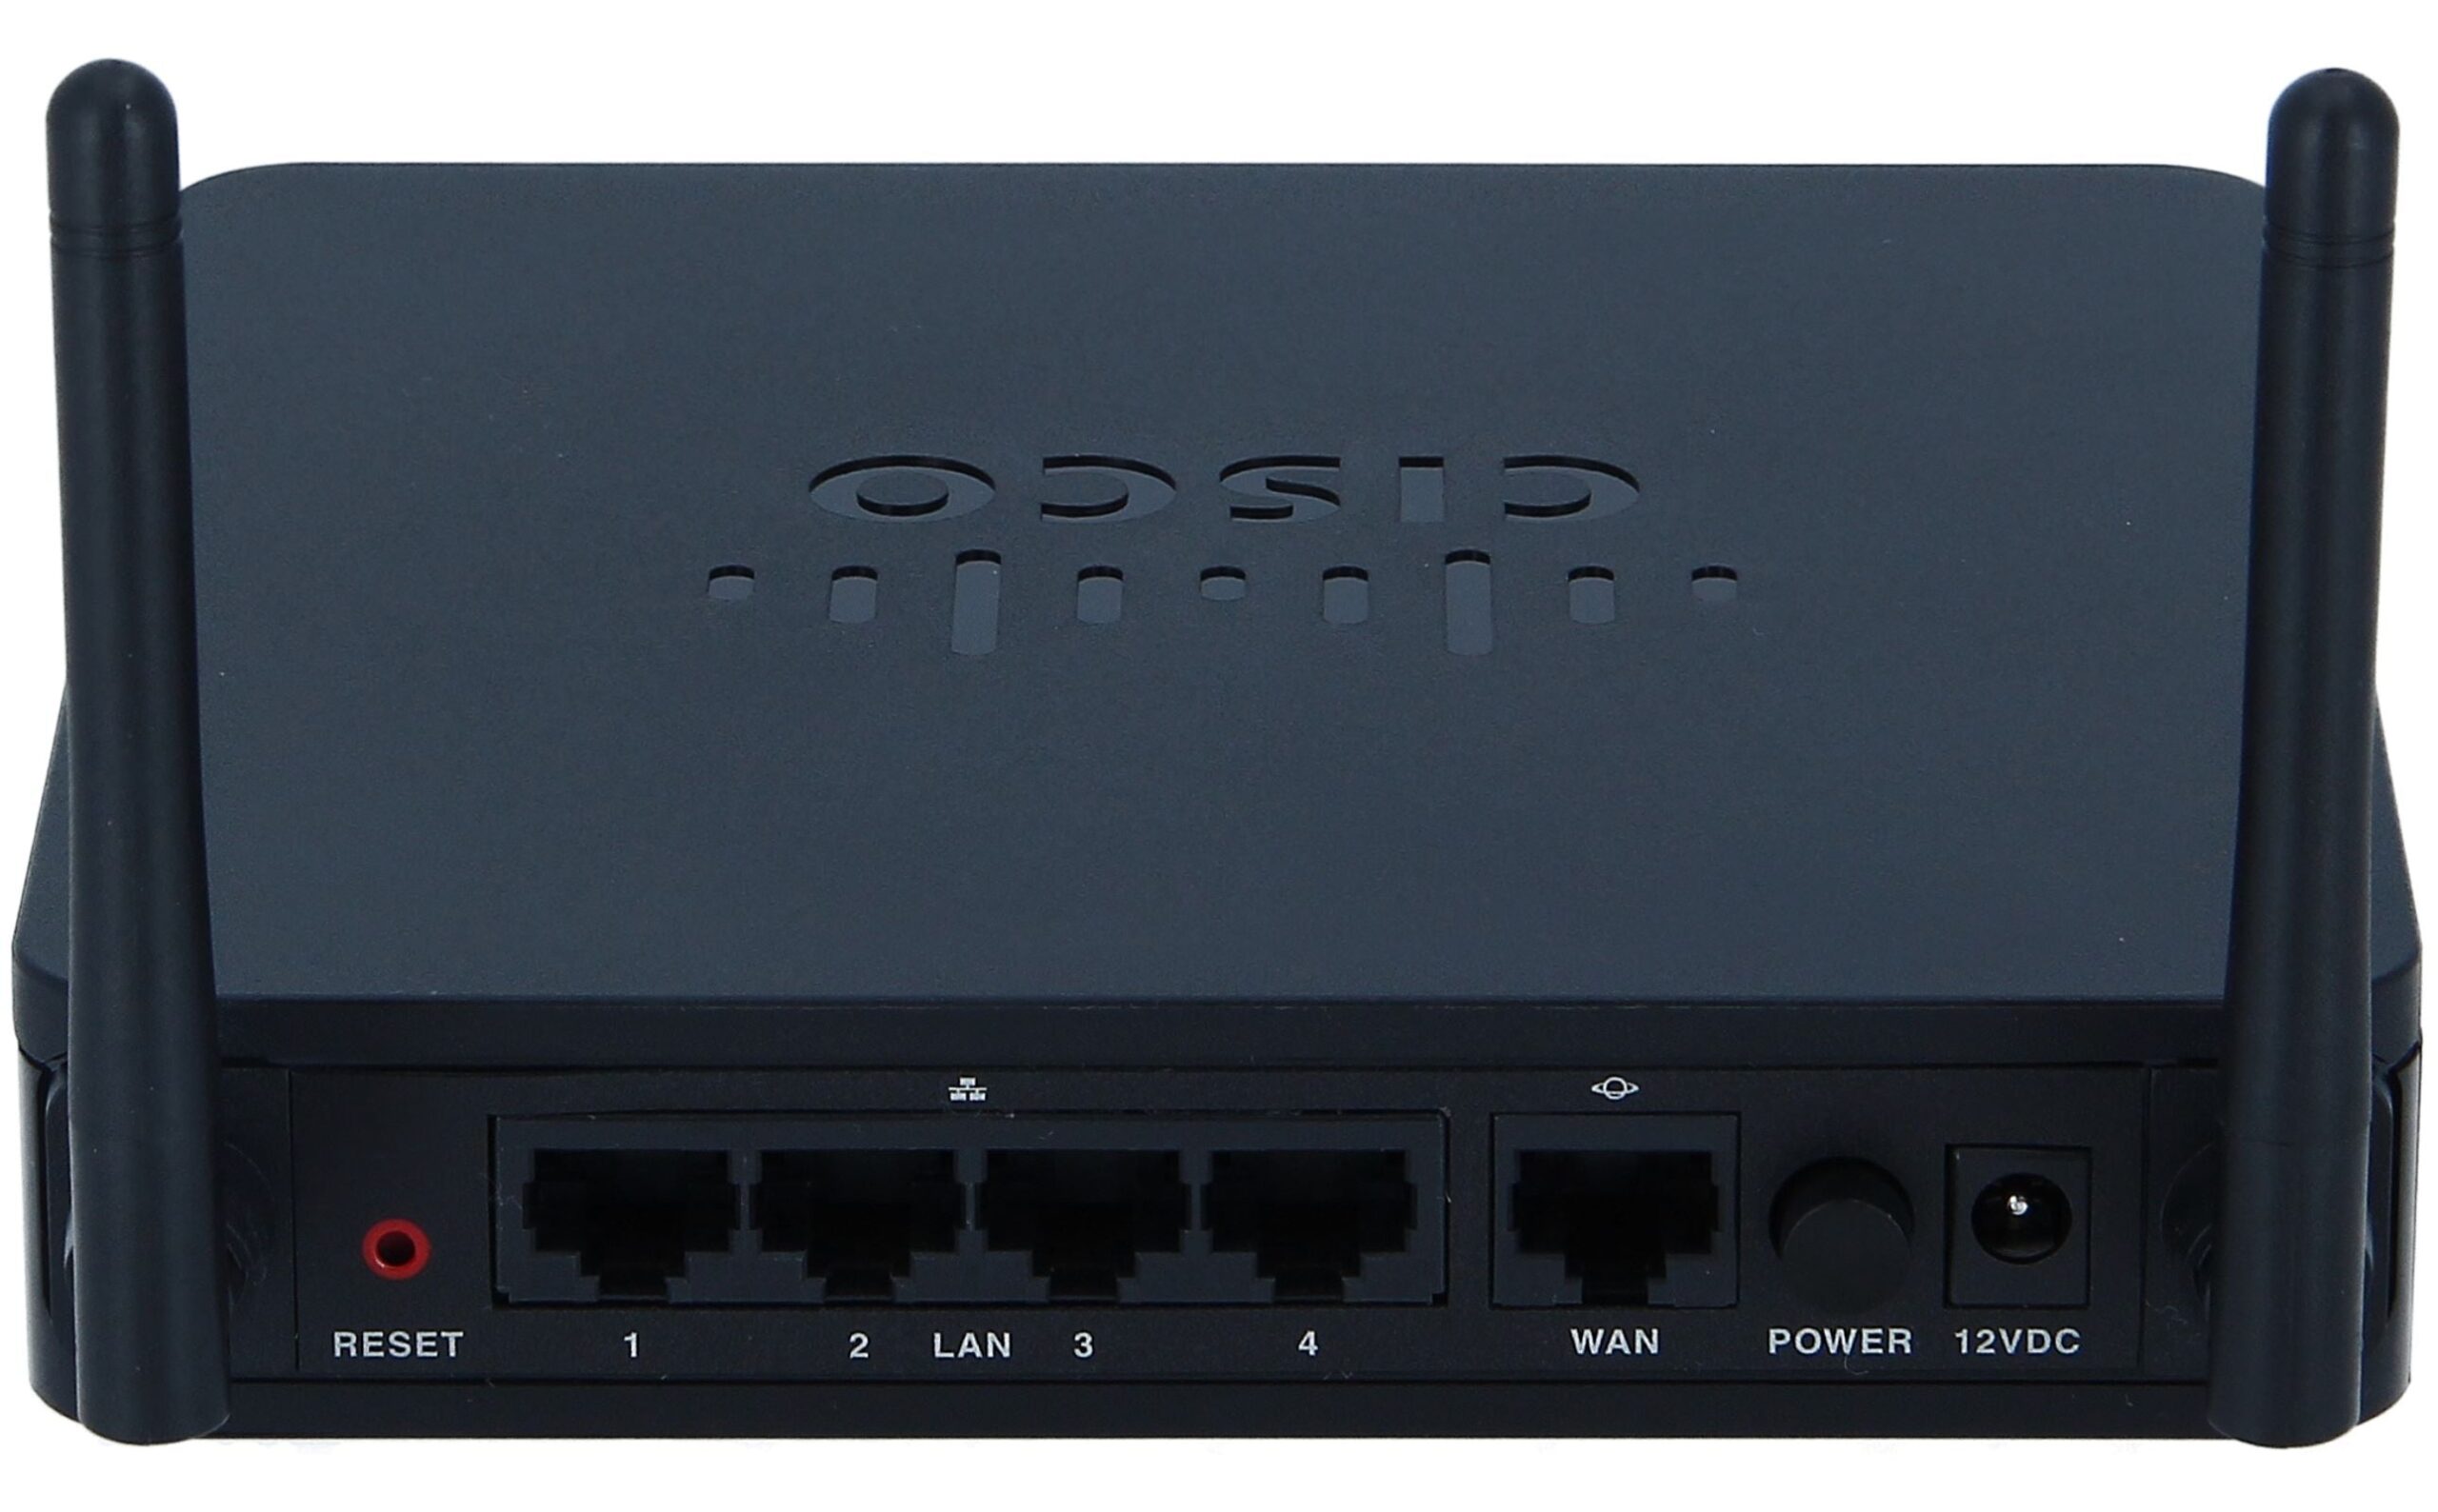 cisco-rv215w-e-k9-g5-rv215w-wireless-n-vpn-router-10125490-QBLB.jpg